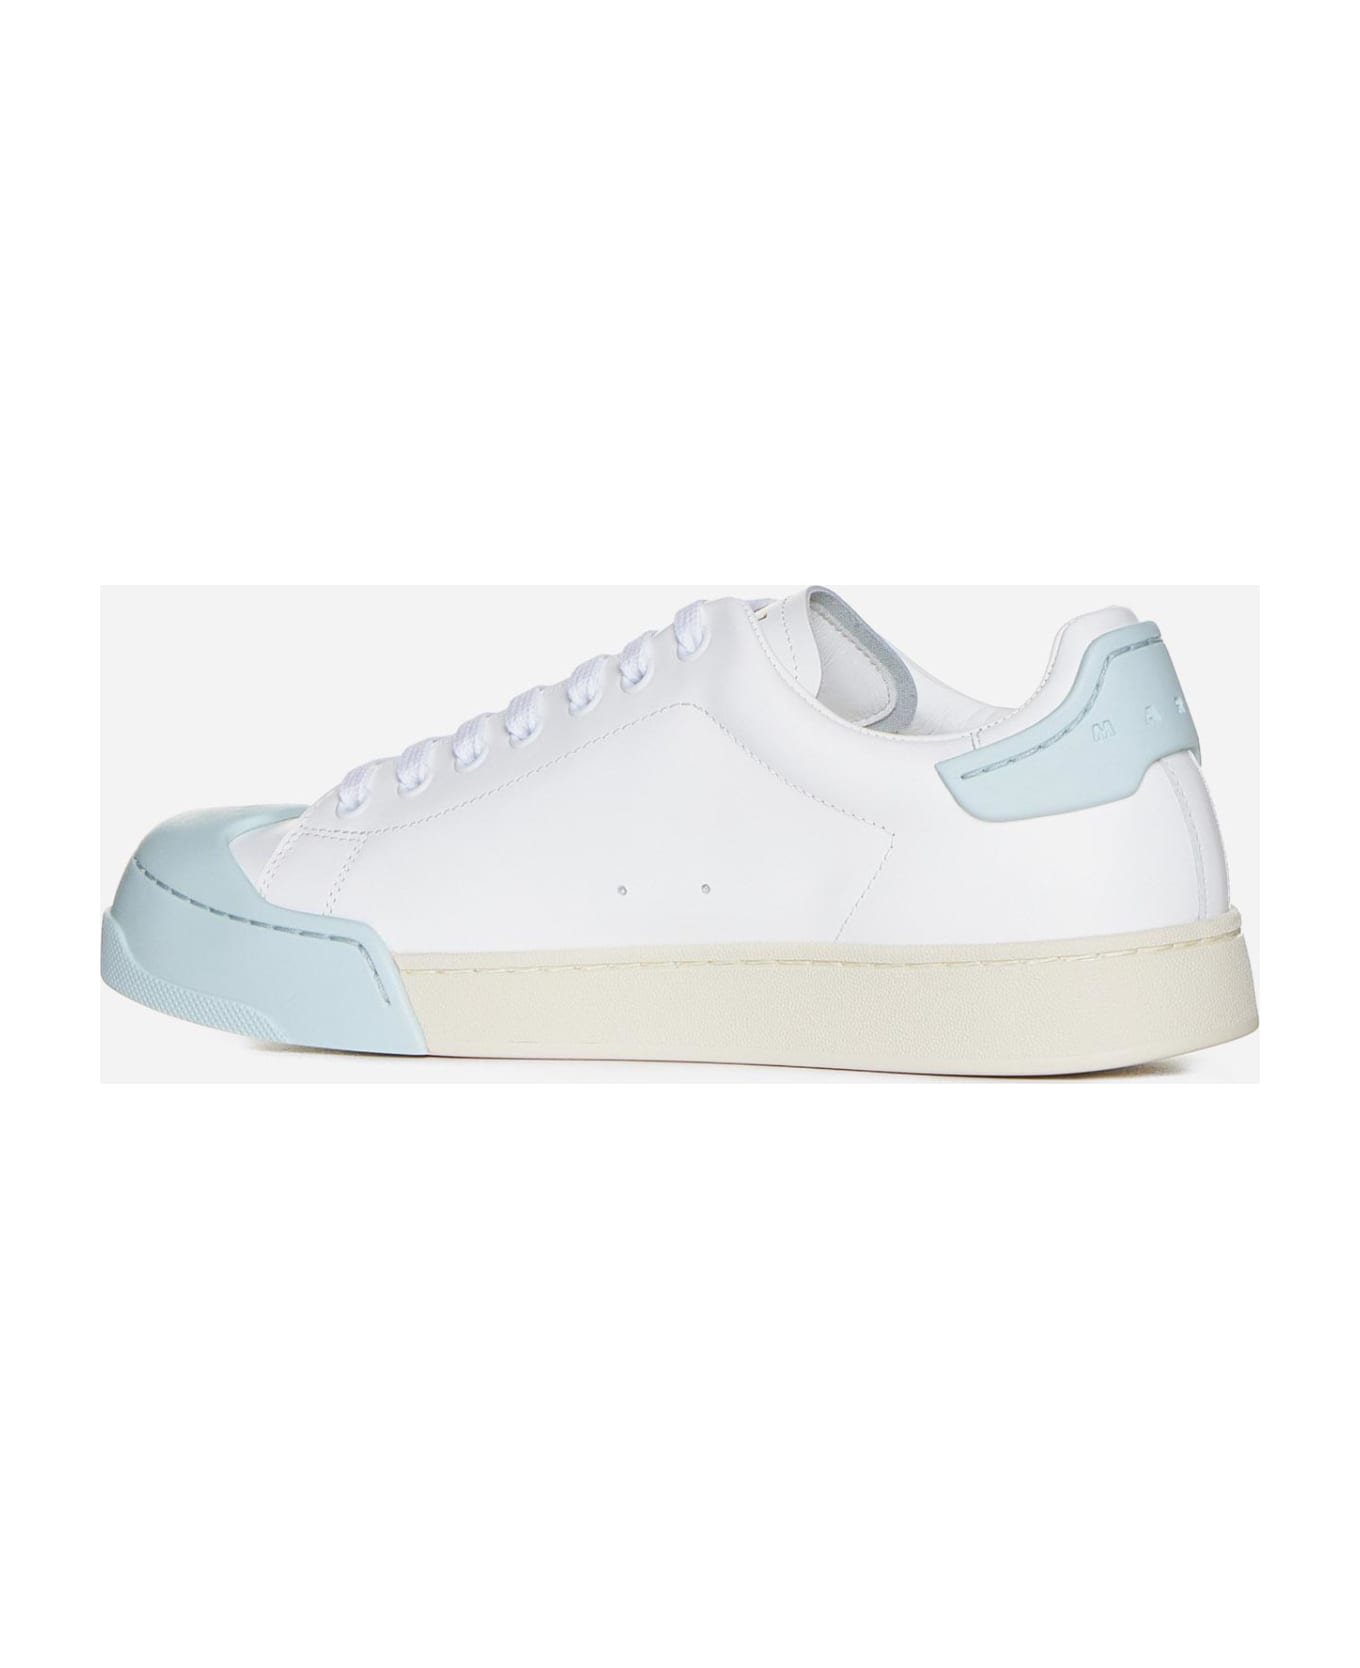 Marni Dada Bumper Leather Sneakers - White / light blue